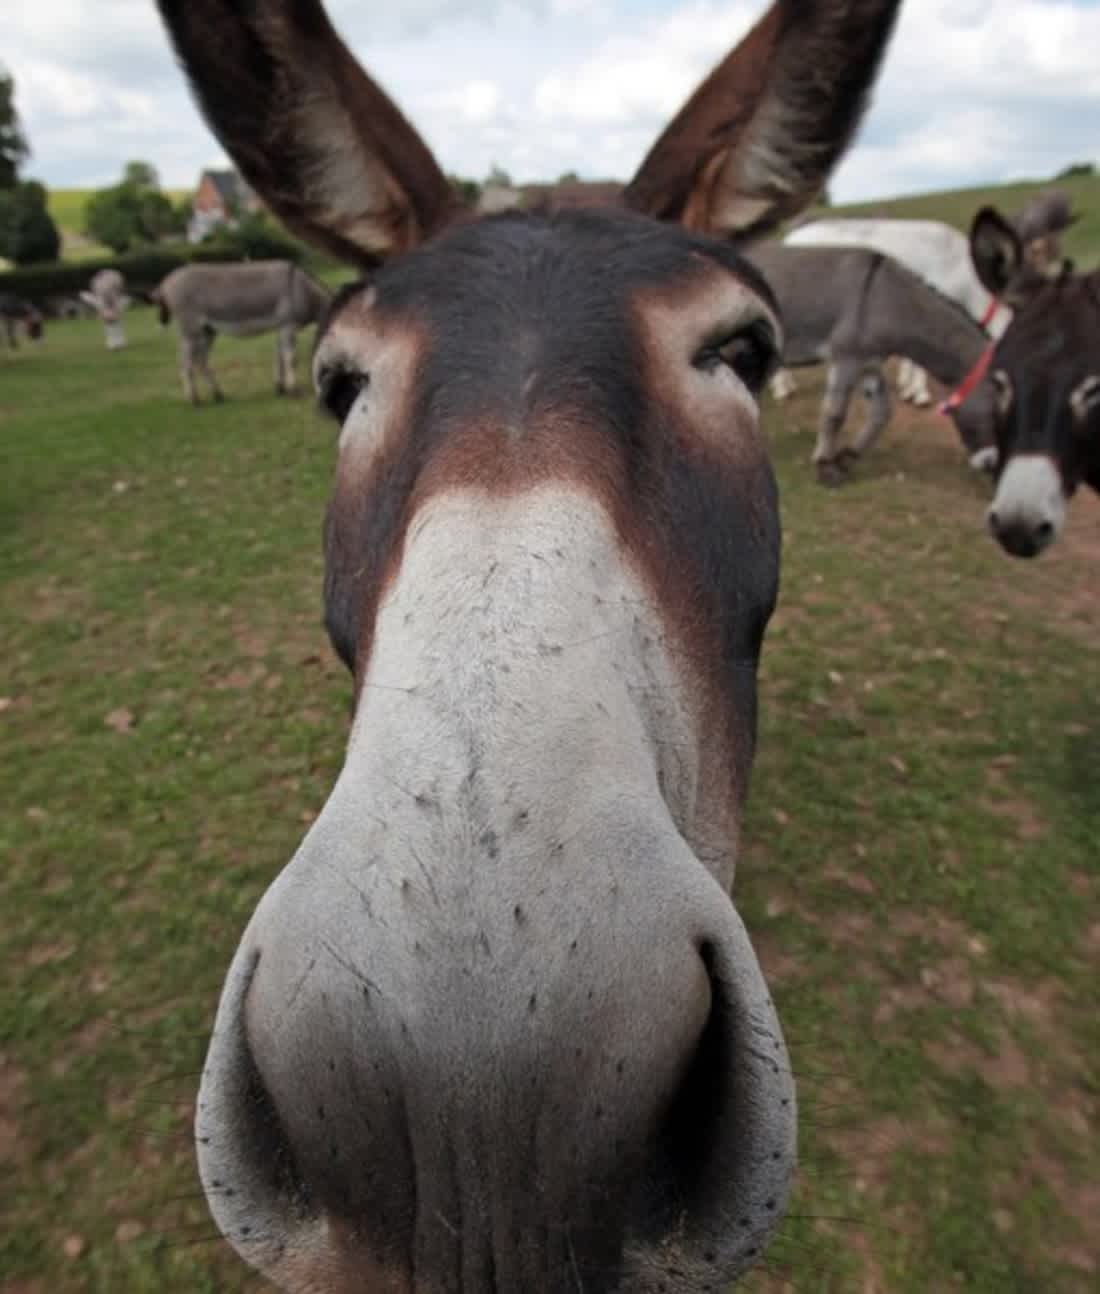 weirdest farm animals - Donkeys